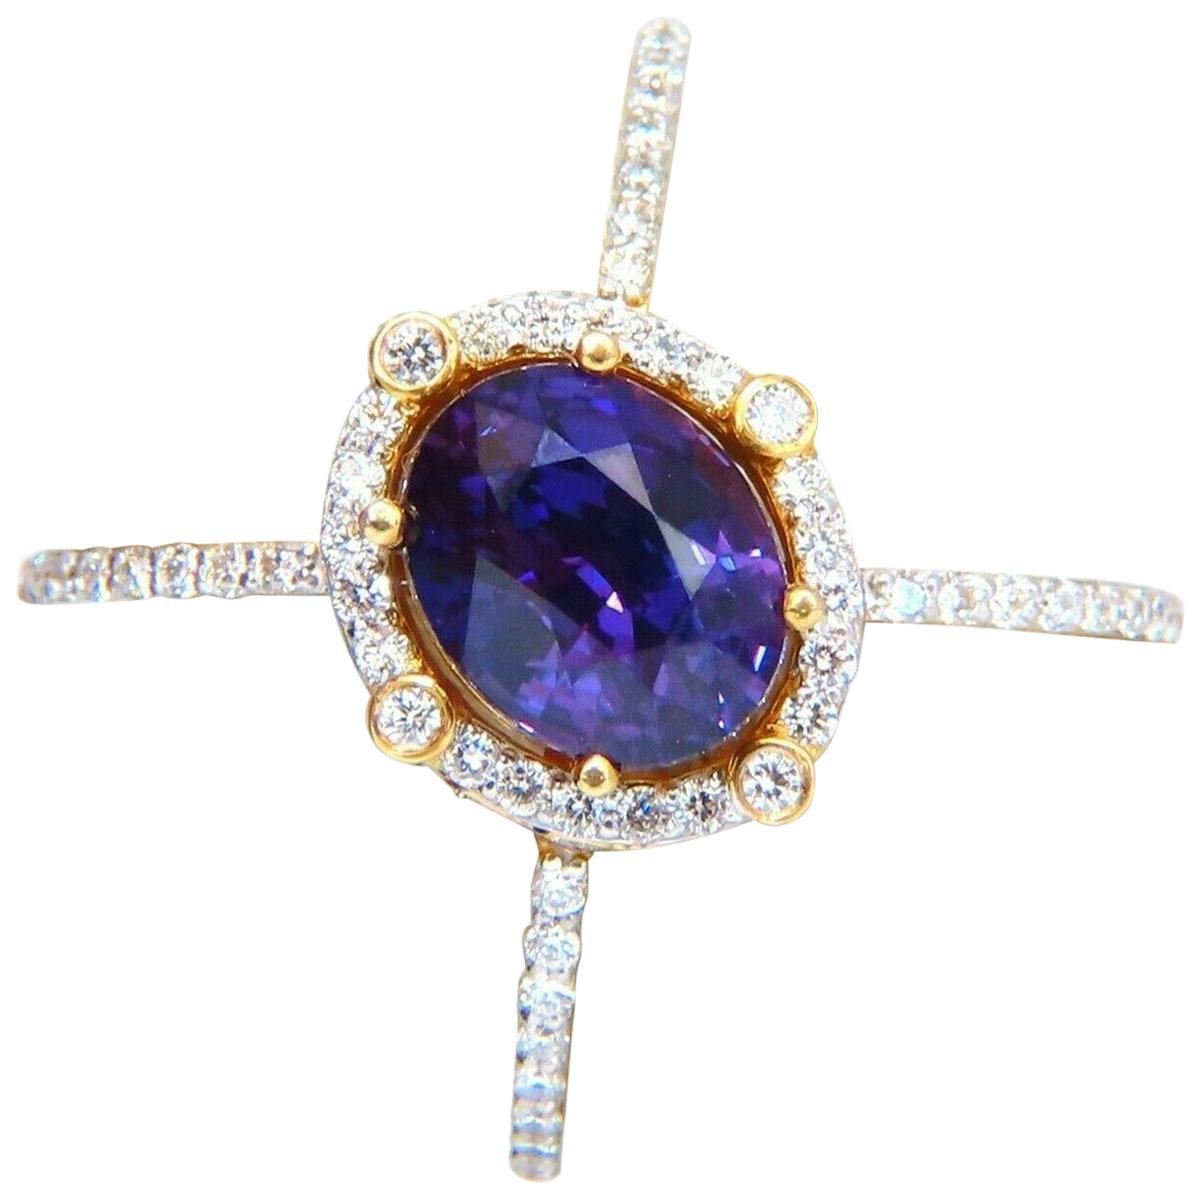 GIA Certified 5.16 Carat Natural Vivid Purple Sapphire Diamonds Ring